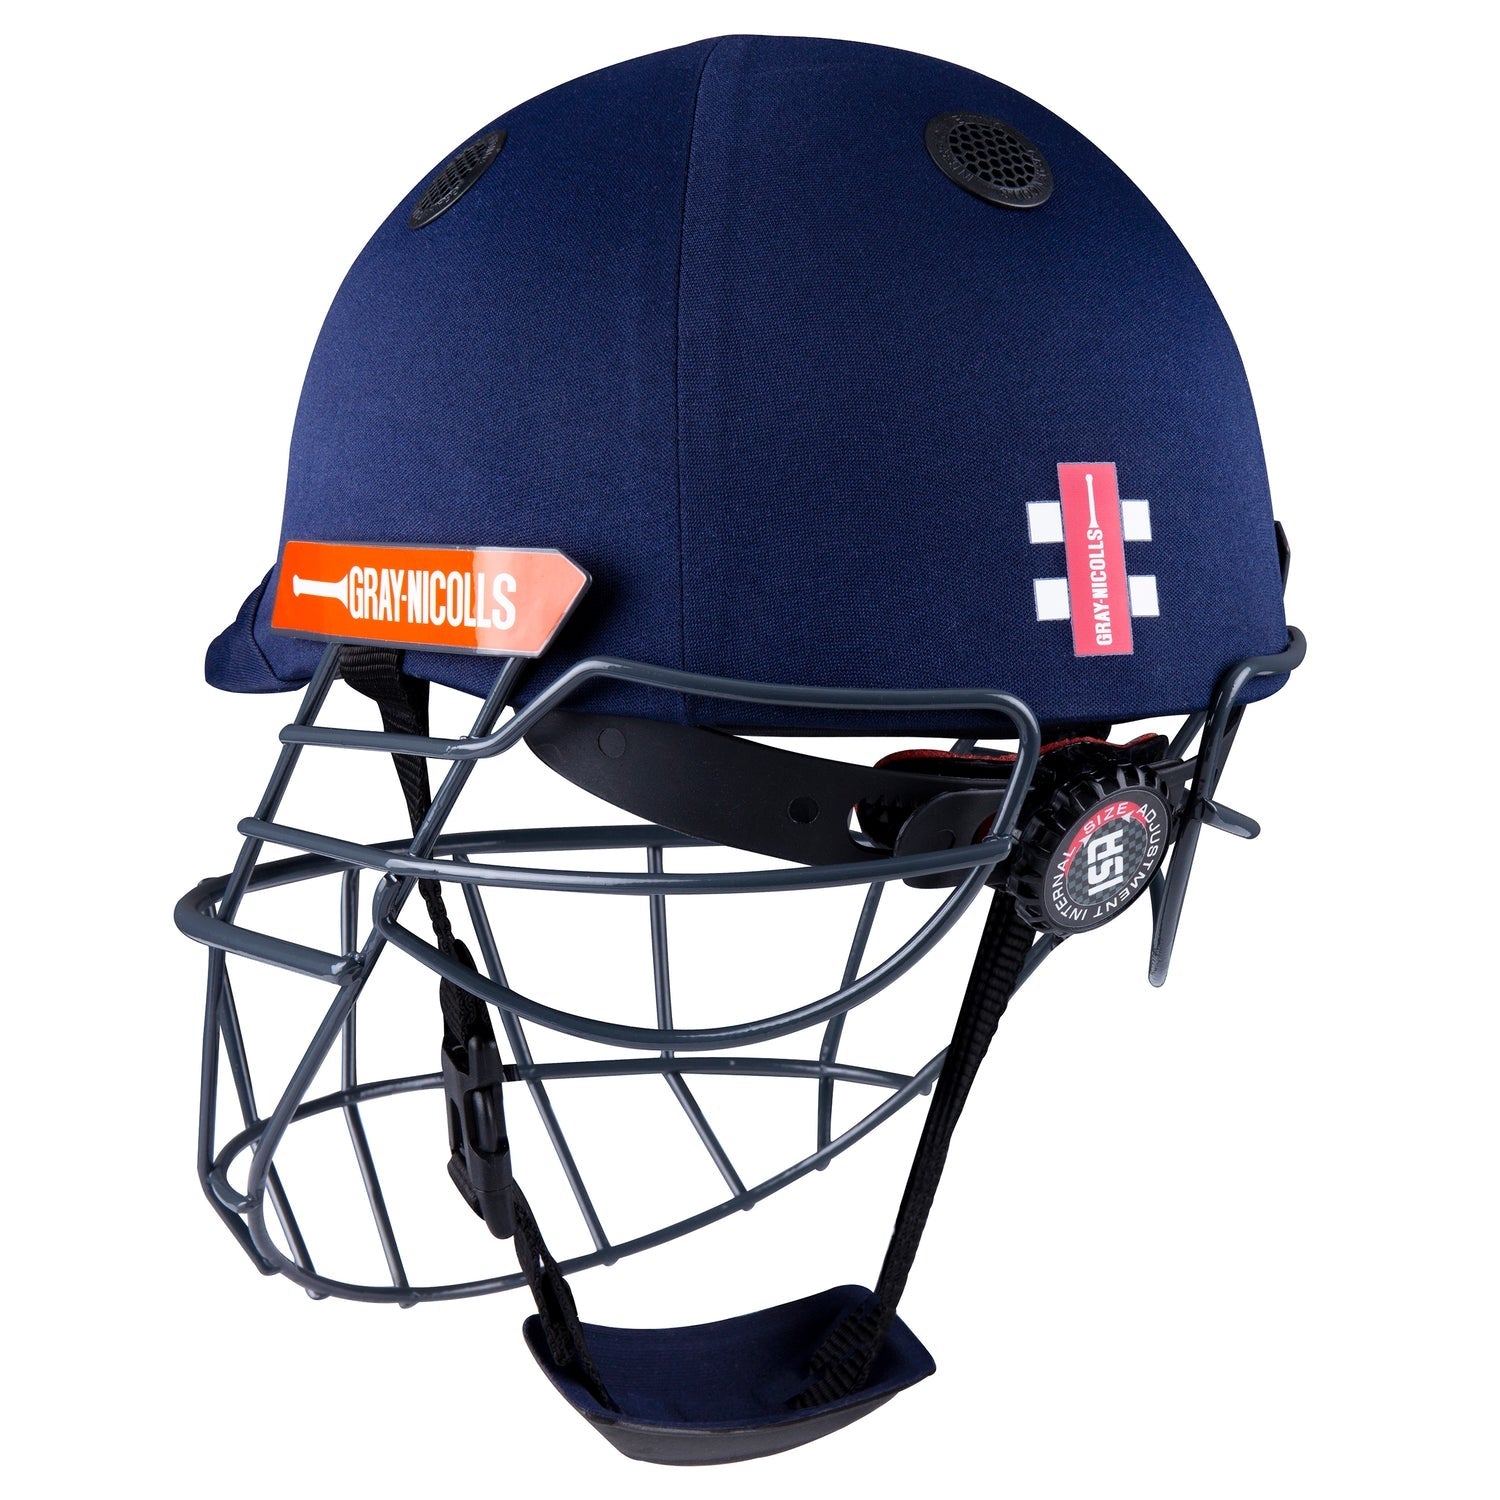 Gray-Nicolls Batting Helmet, Model Ultimate 360, Navy Blue - S, M, L, XL